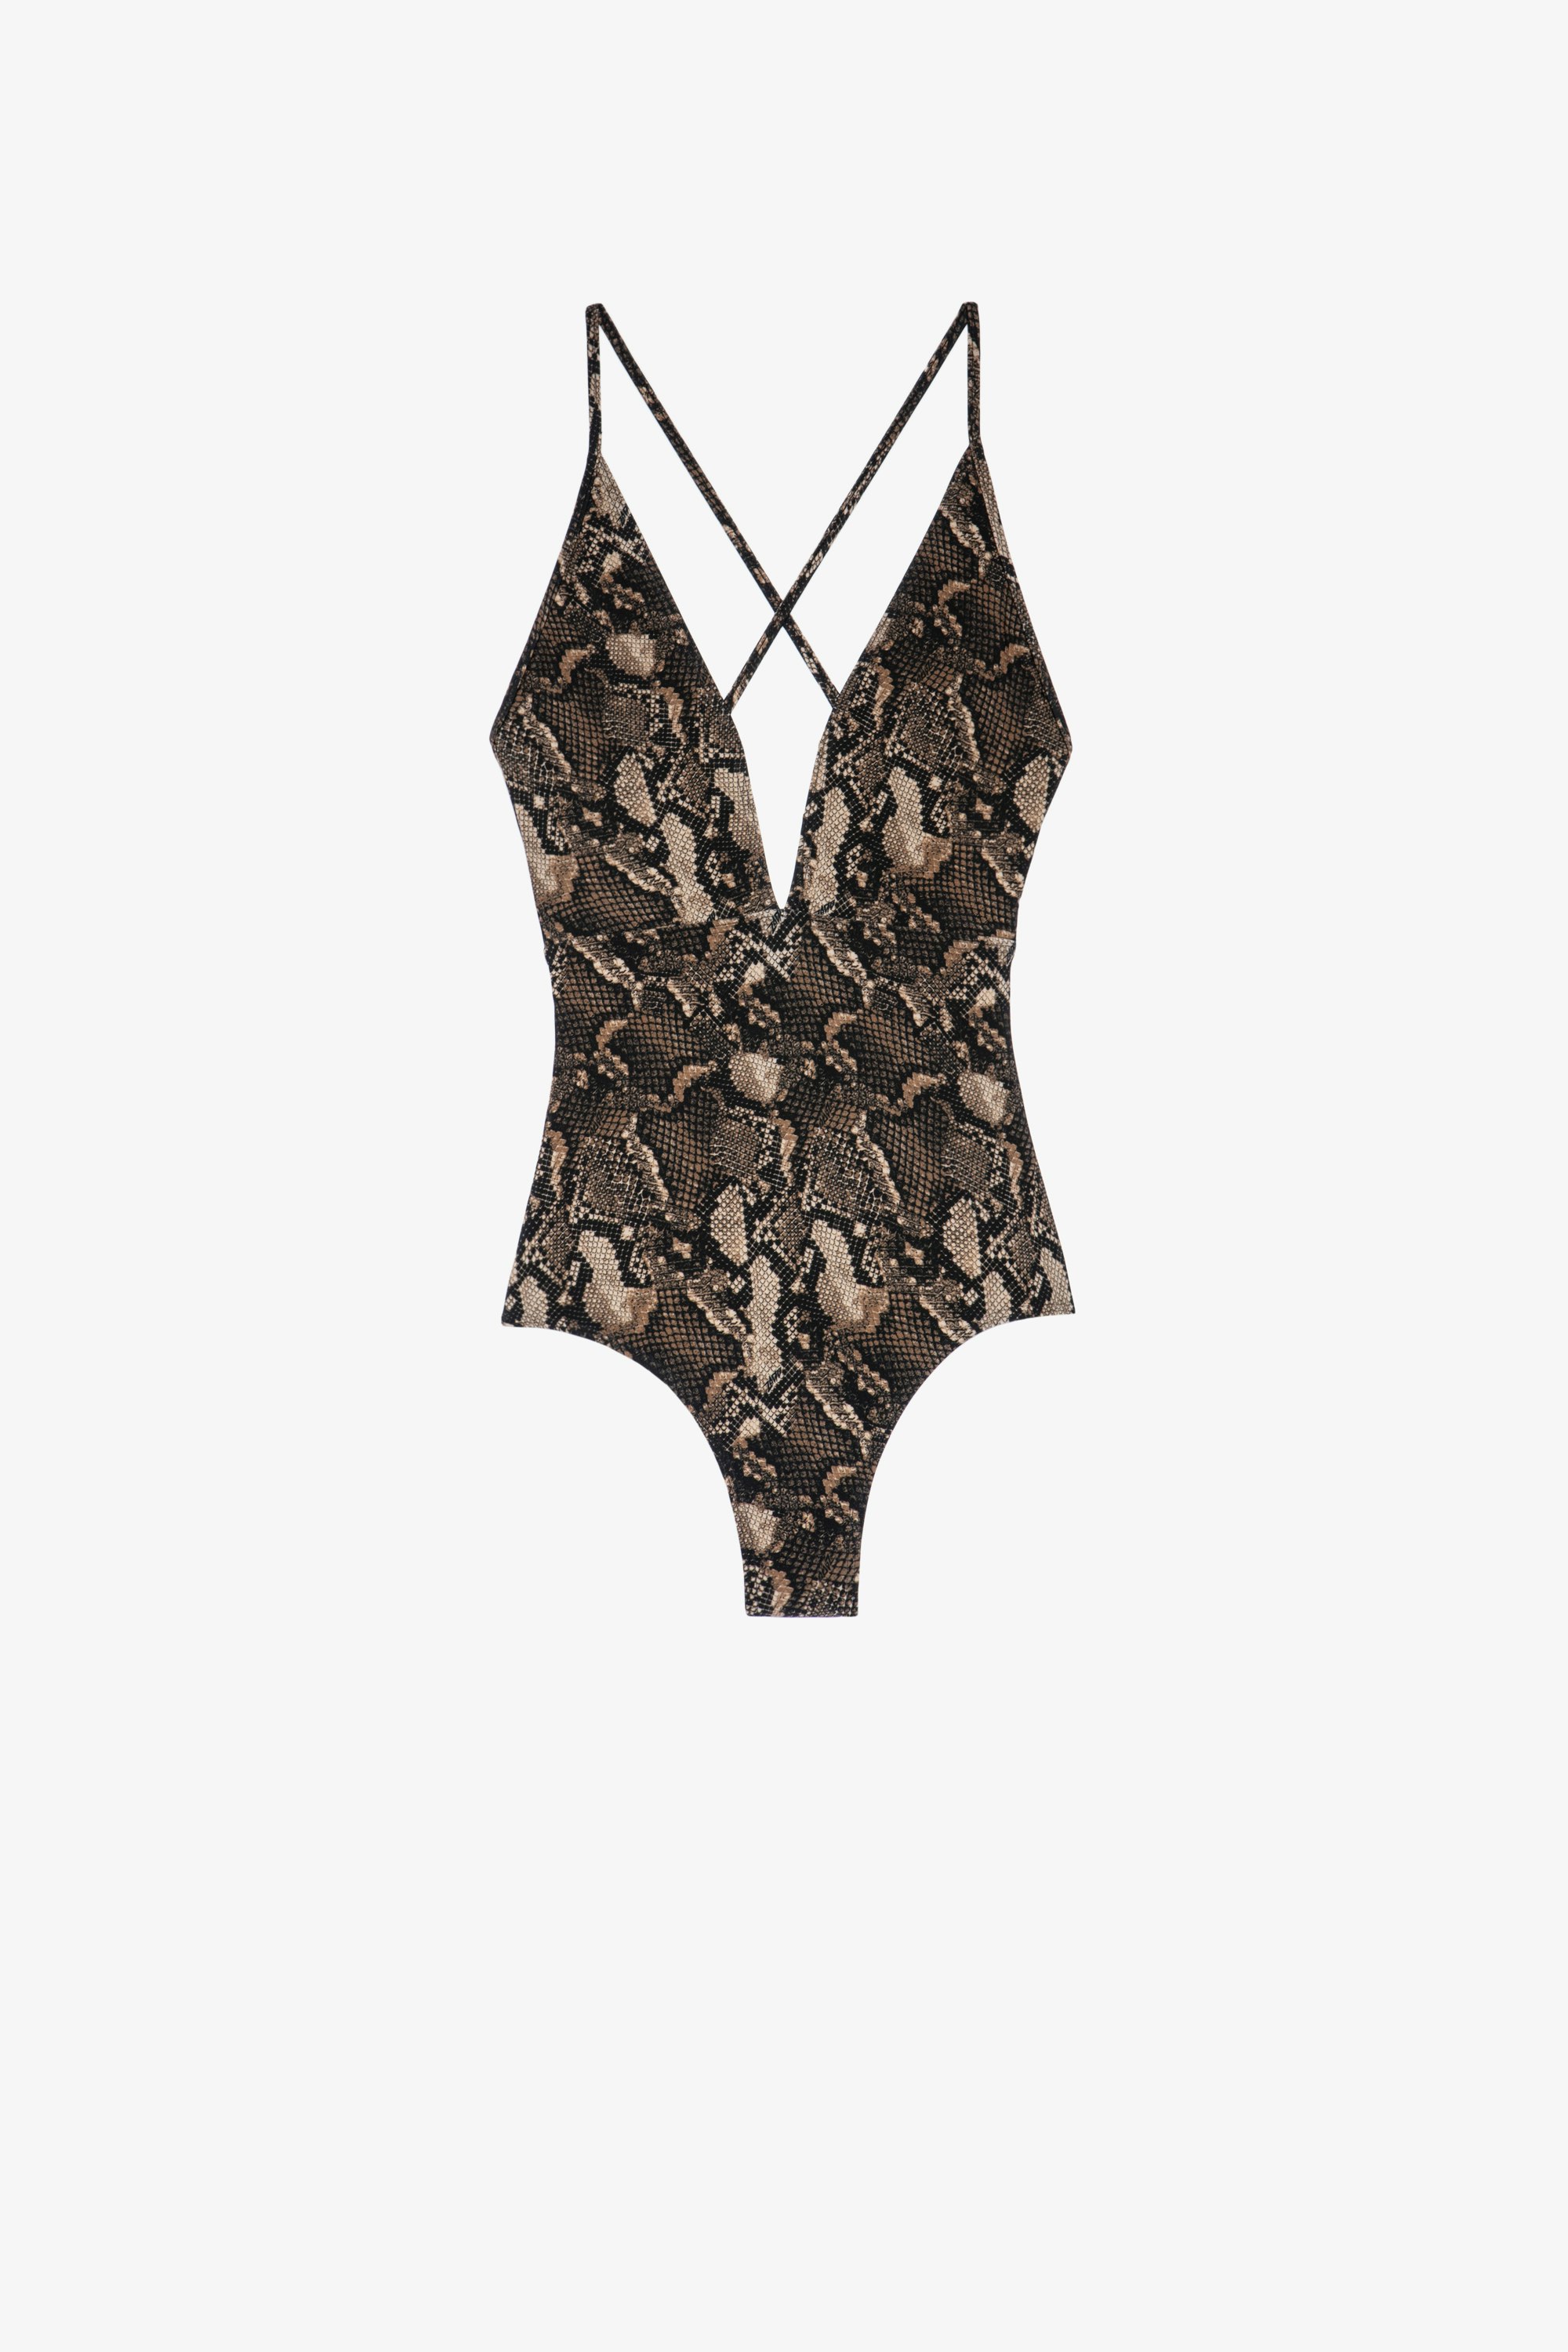 Low-neck snake print 水着 1-piece women's snake print swimsuit in brown